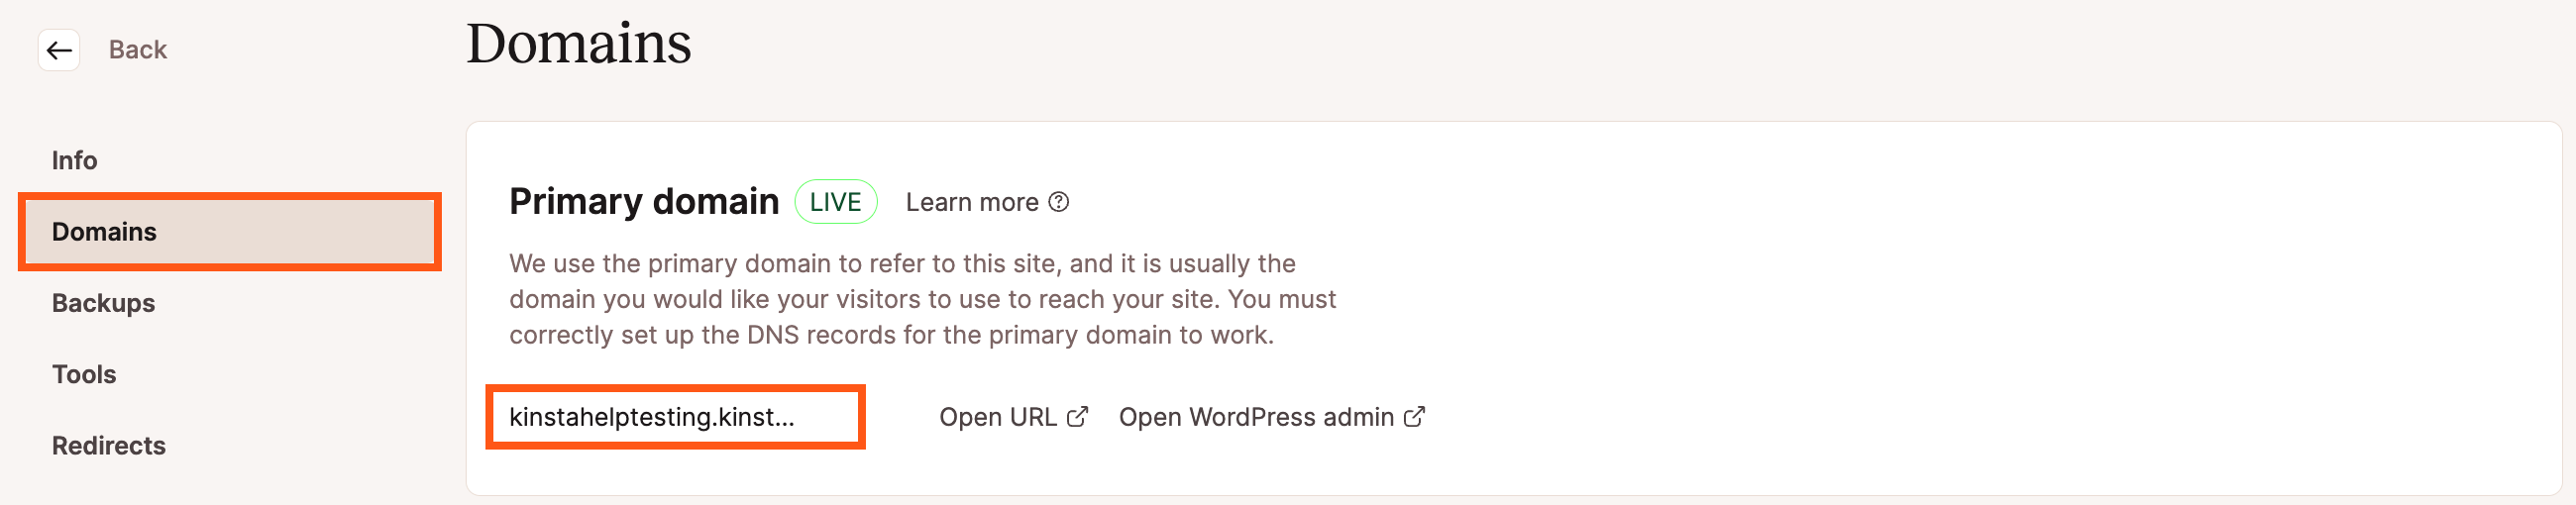 WordPress temporary URL for a Kinsta site